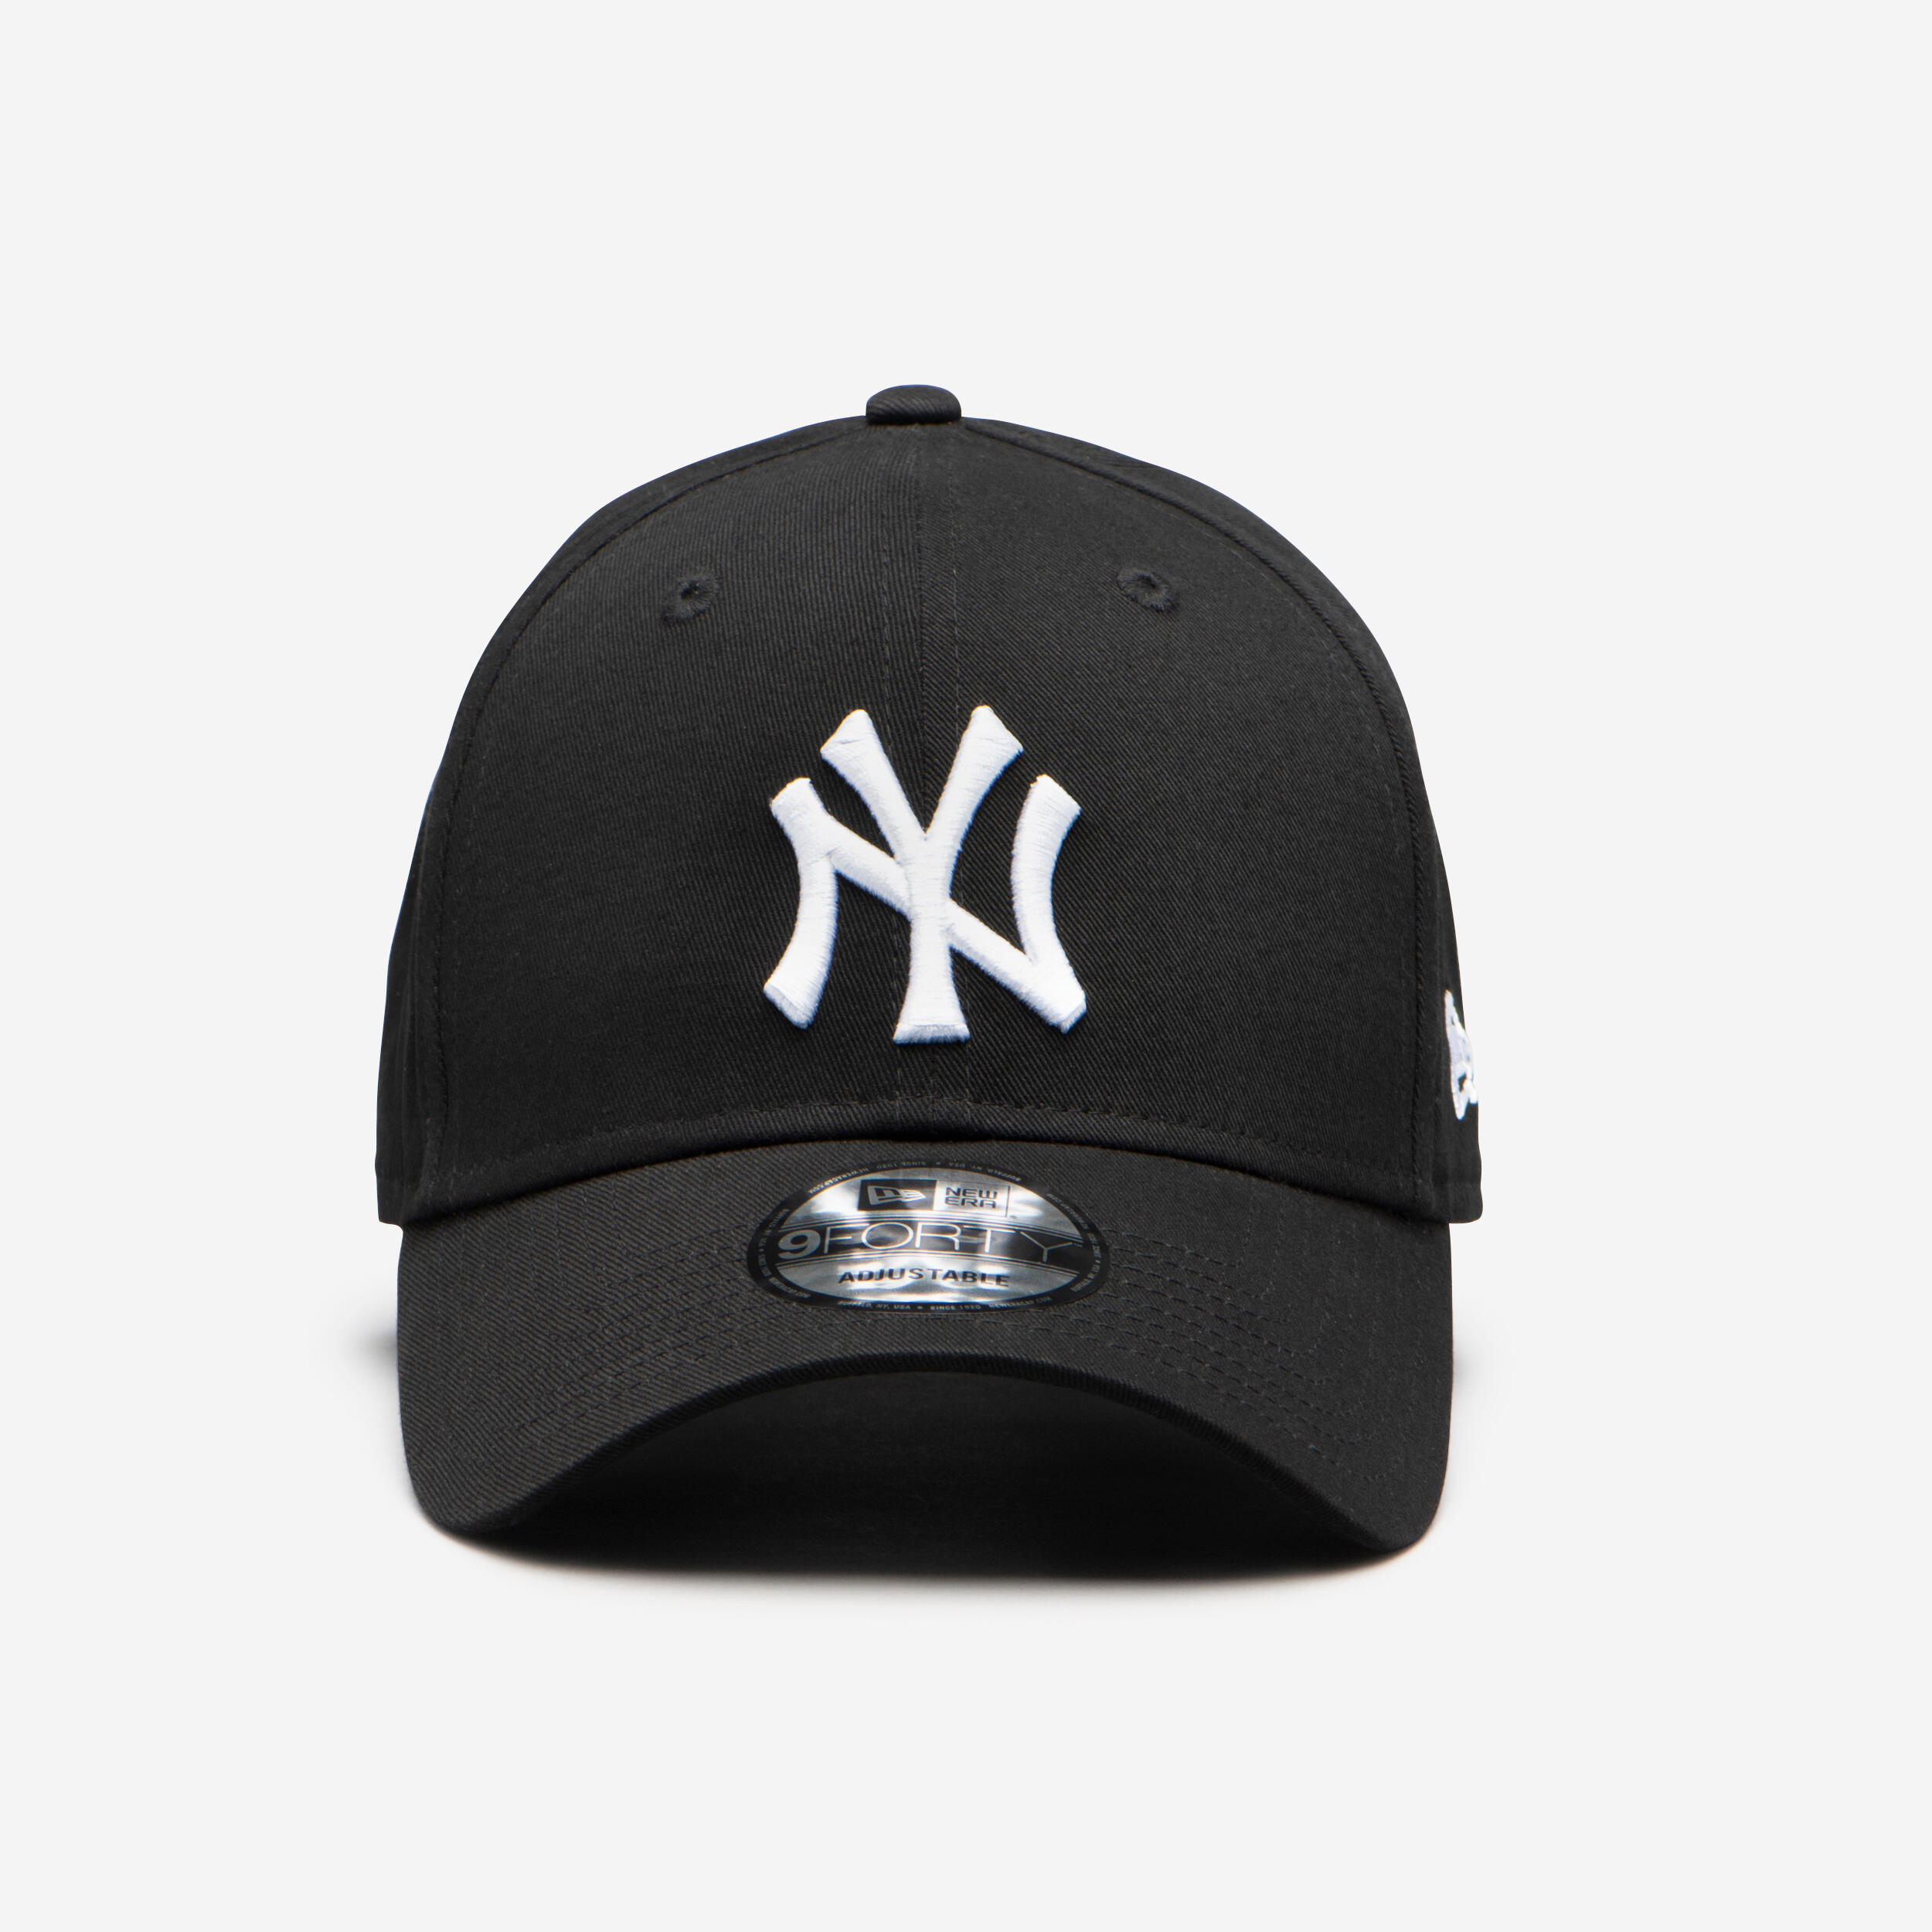 MLB Baseball Caps Hats  Clothing  New Era Cap UK